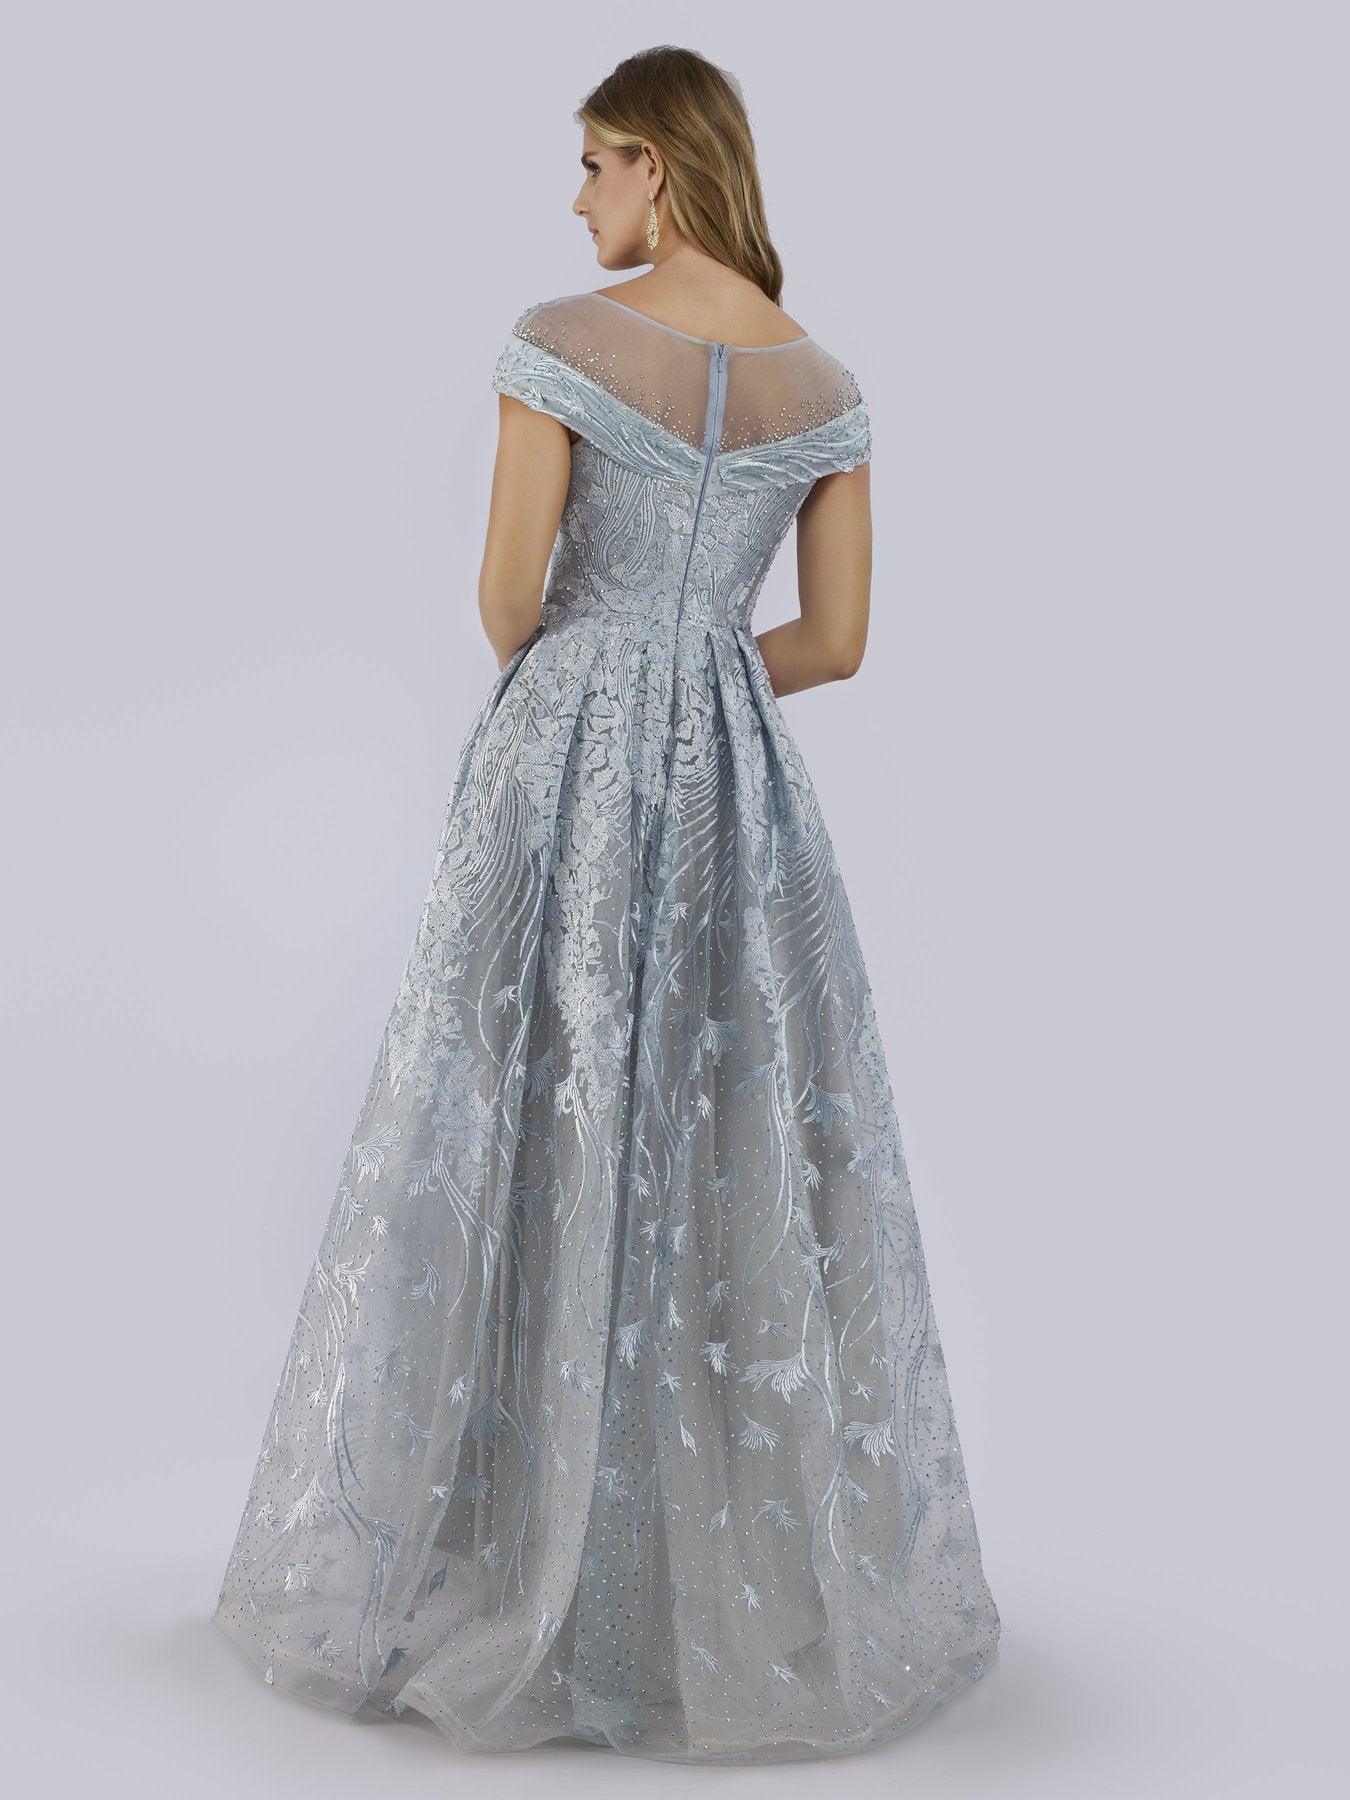 Lara Dresses A-line Long Prom Dress 29768 - The Dress Outlet